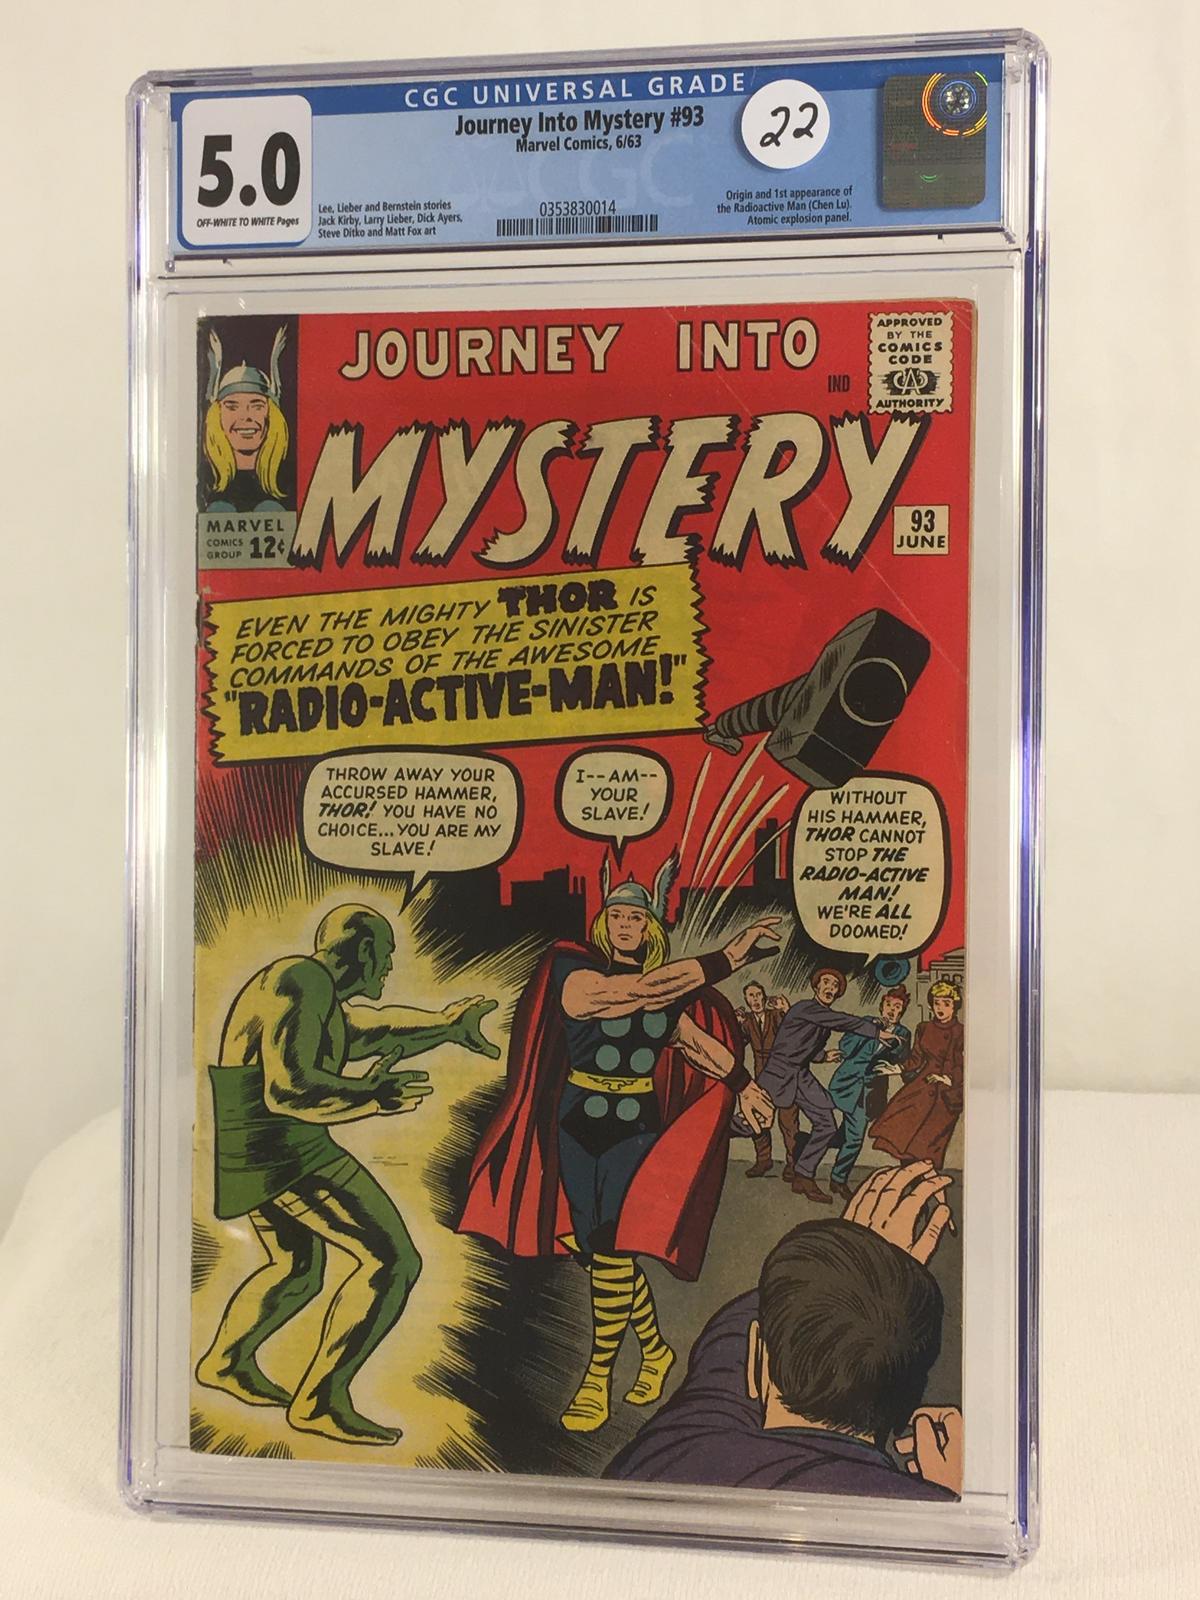 Collector Vintage CGC Universal Grade 5.0 Journey Into Mystery #93 Marvel Comics 6/63